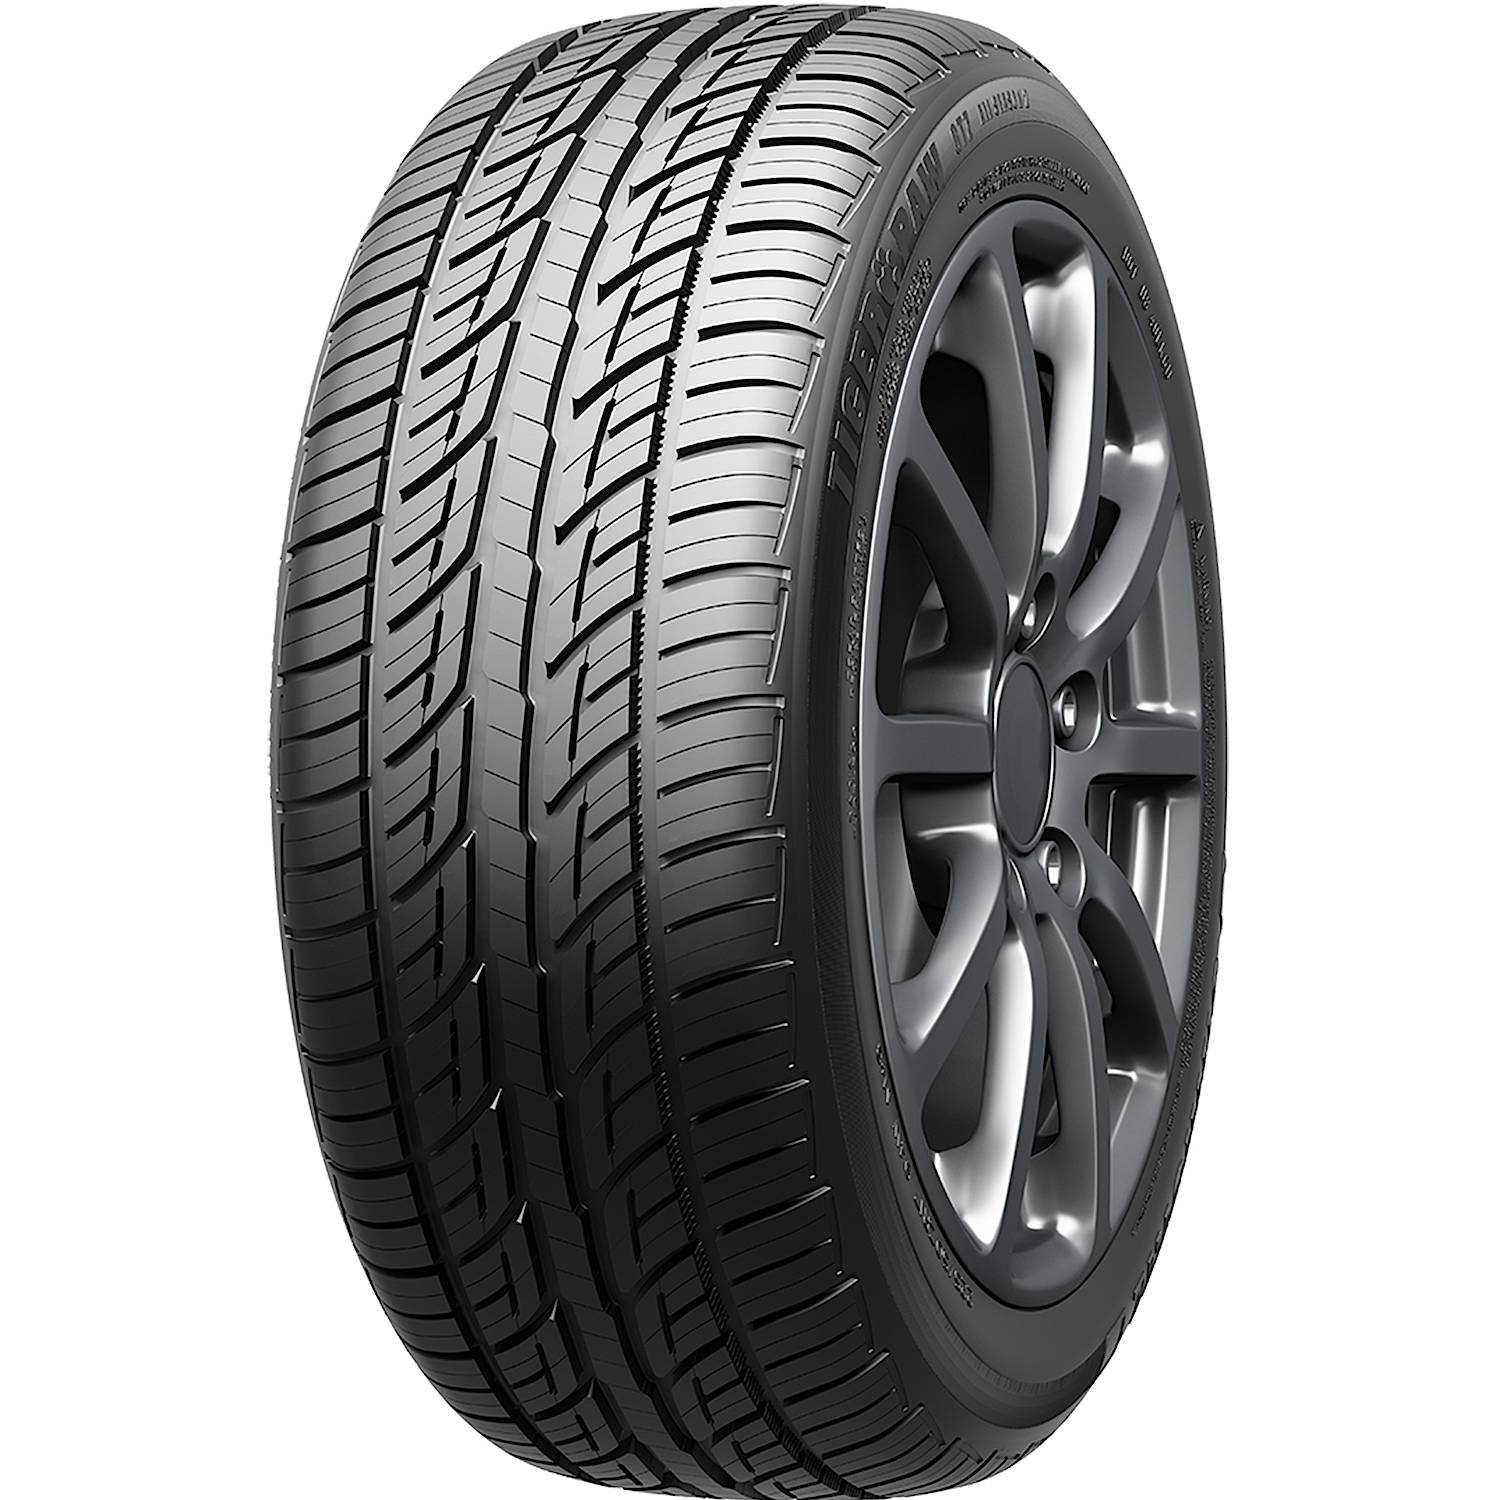 UNIROYAL TIGER PAW GTZ AS2 235/45ZR17 (25.3X9.3R 17) Tires